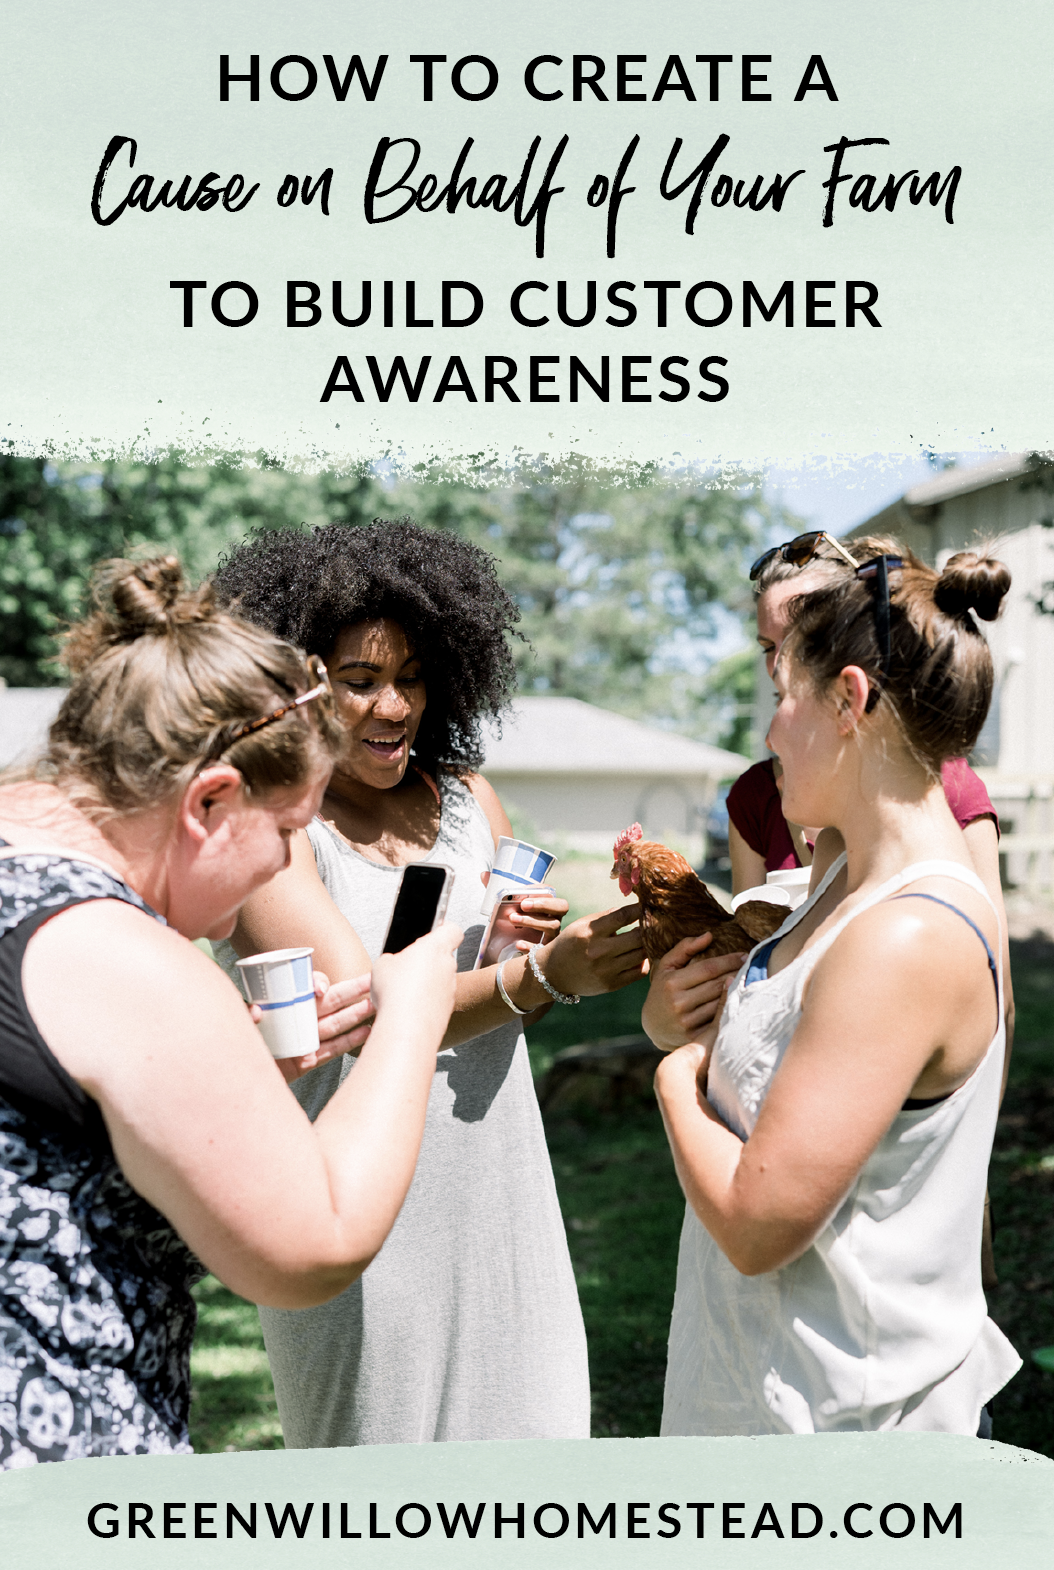 Farm Marketing Tips: How to build customer awareness of your farm